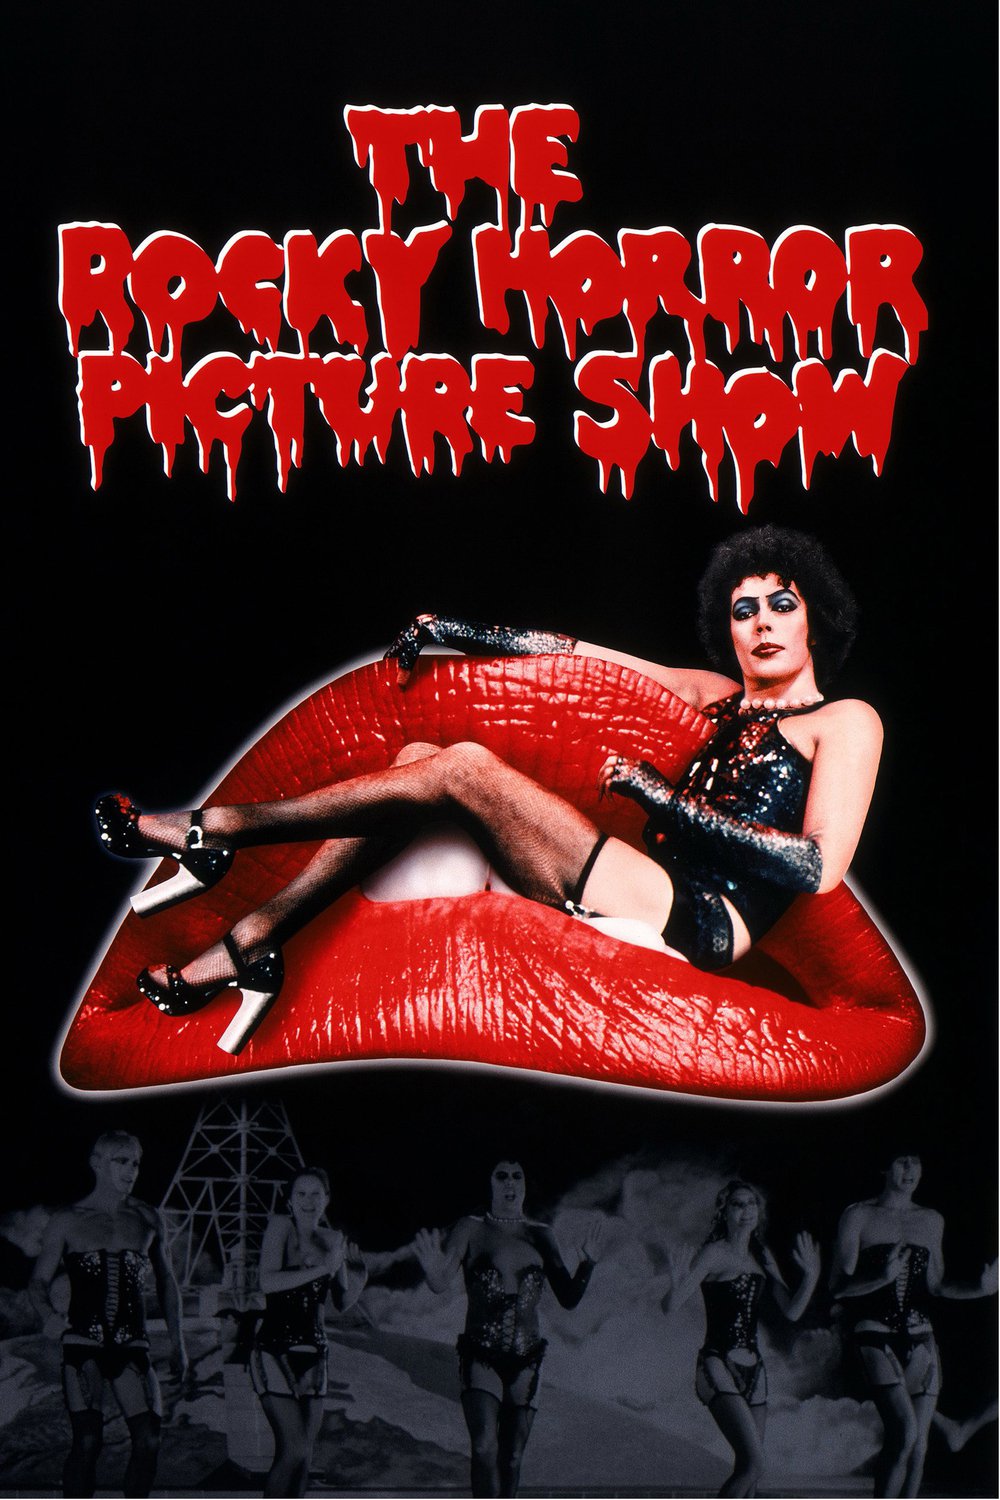 Poster de la película "The Rocky Horror Picture Show"